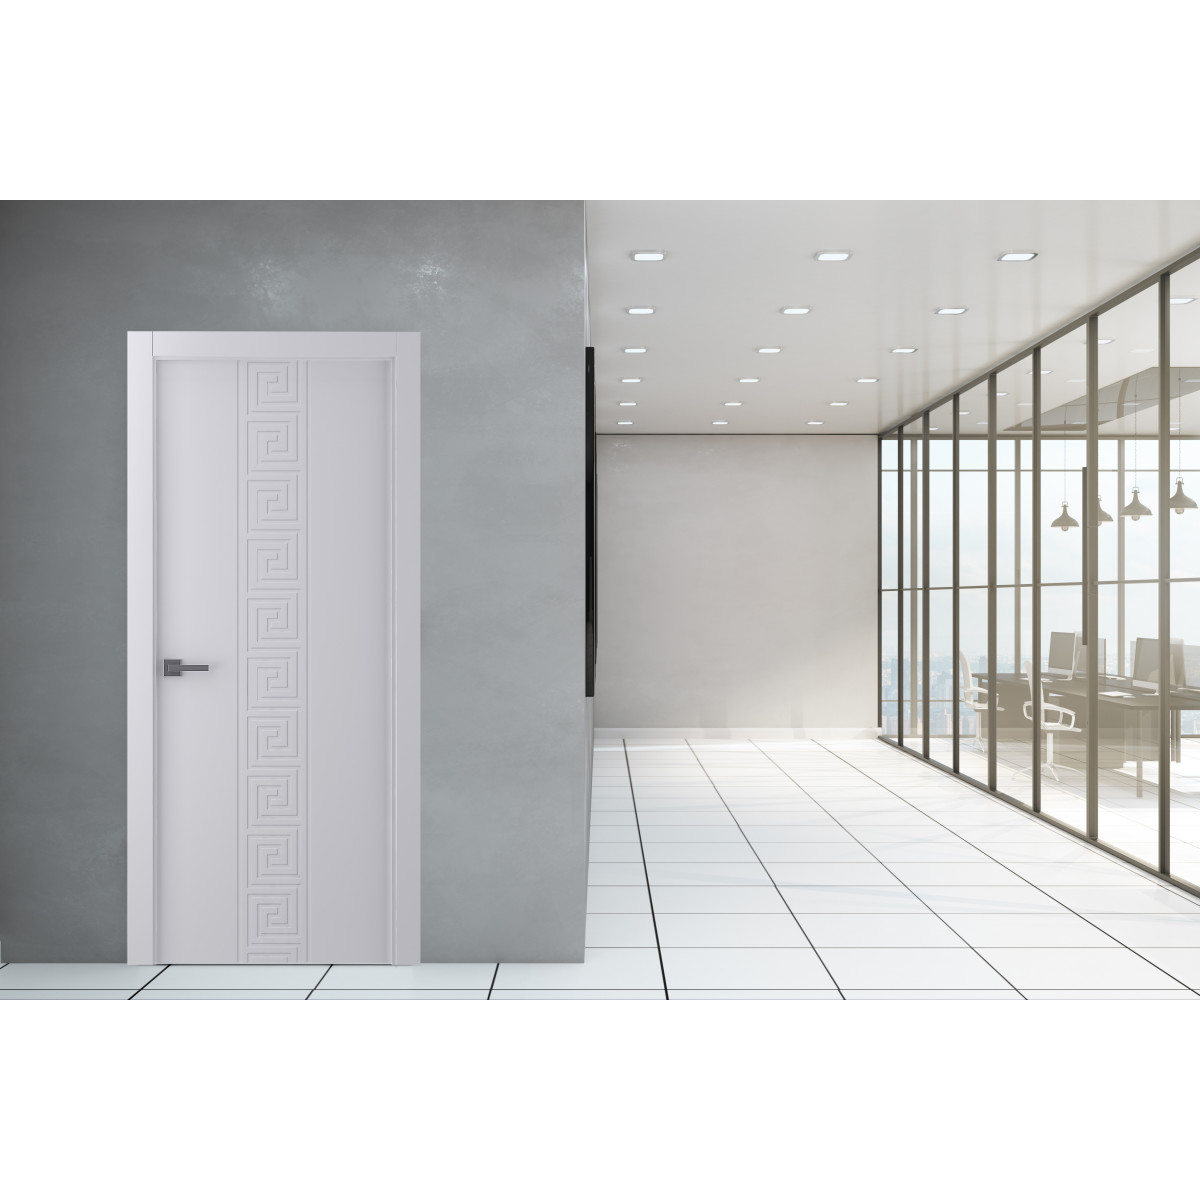 Дверь межкомнатная глухая с замком в комплекте Эллада 90x200 см экошпон цвет белый